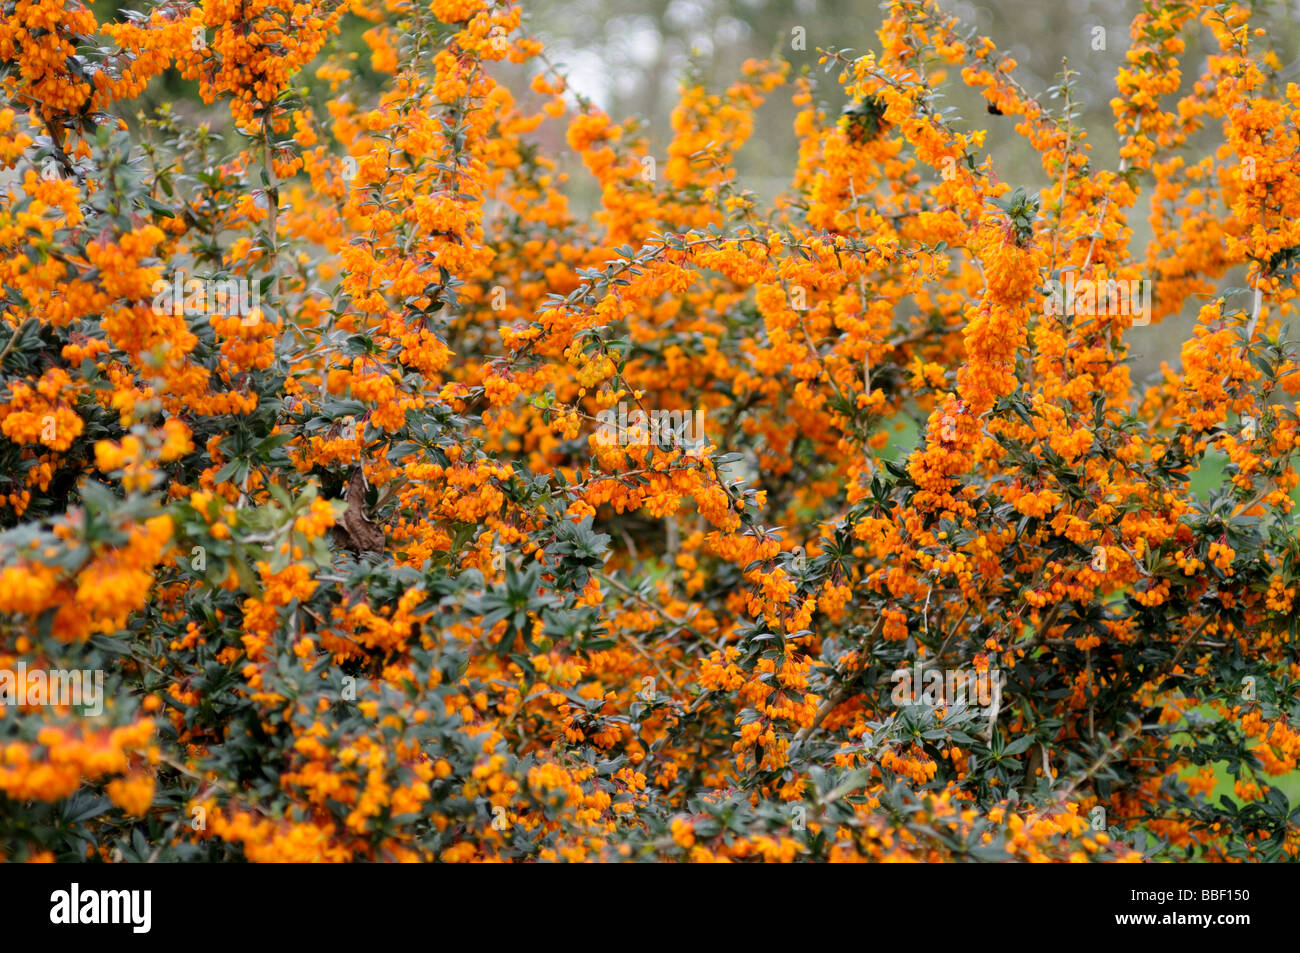 Selective Focus Close-up of a Large Berberis Darwinii with Bright Orange Flowers Stock Photo